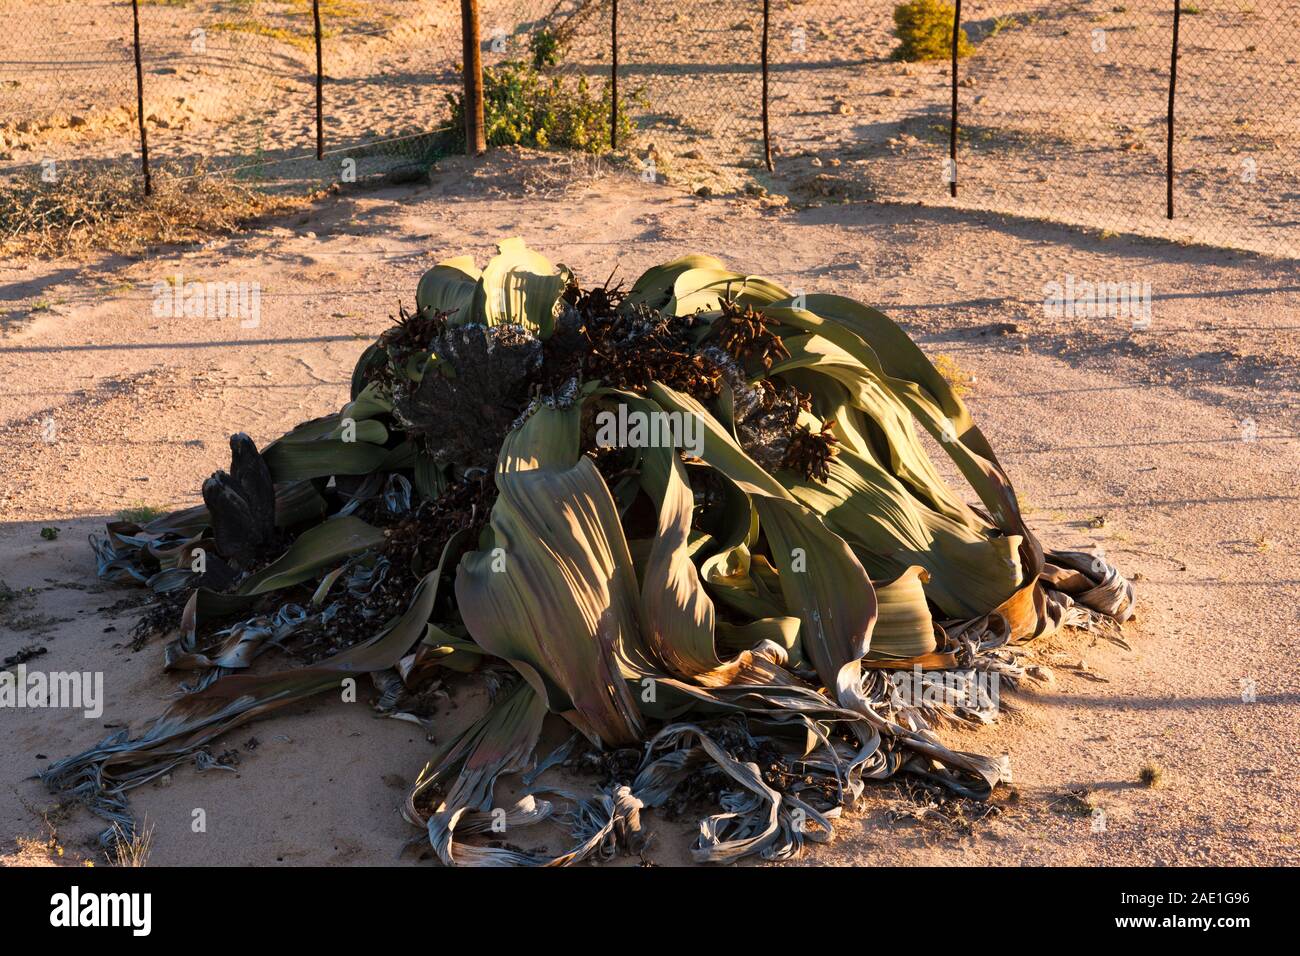 'Welwitschia Giant' is biggest, desert wild plant, 'Welwitschia Drive' near Swakopmund city, Namib desert, Namibia, Southern Africa, Africa Stock Photo